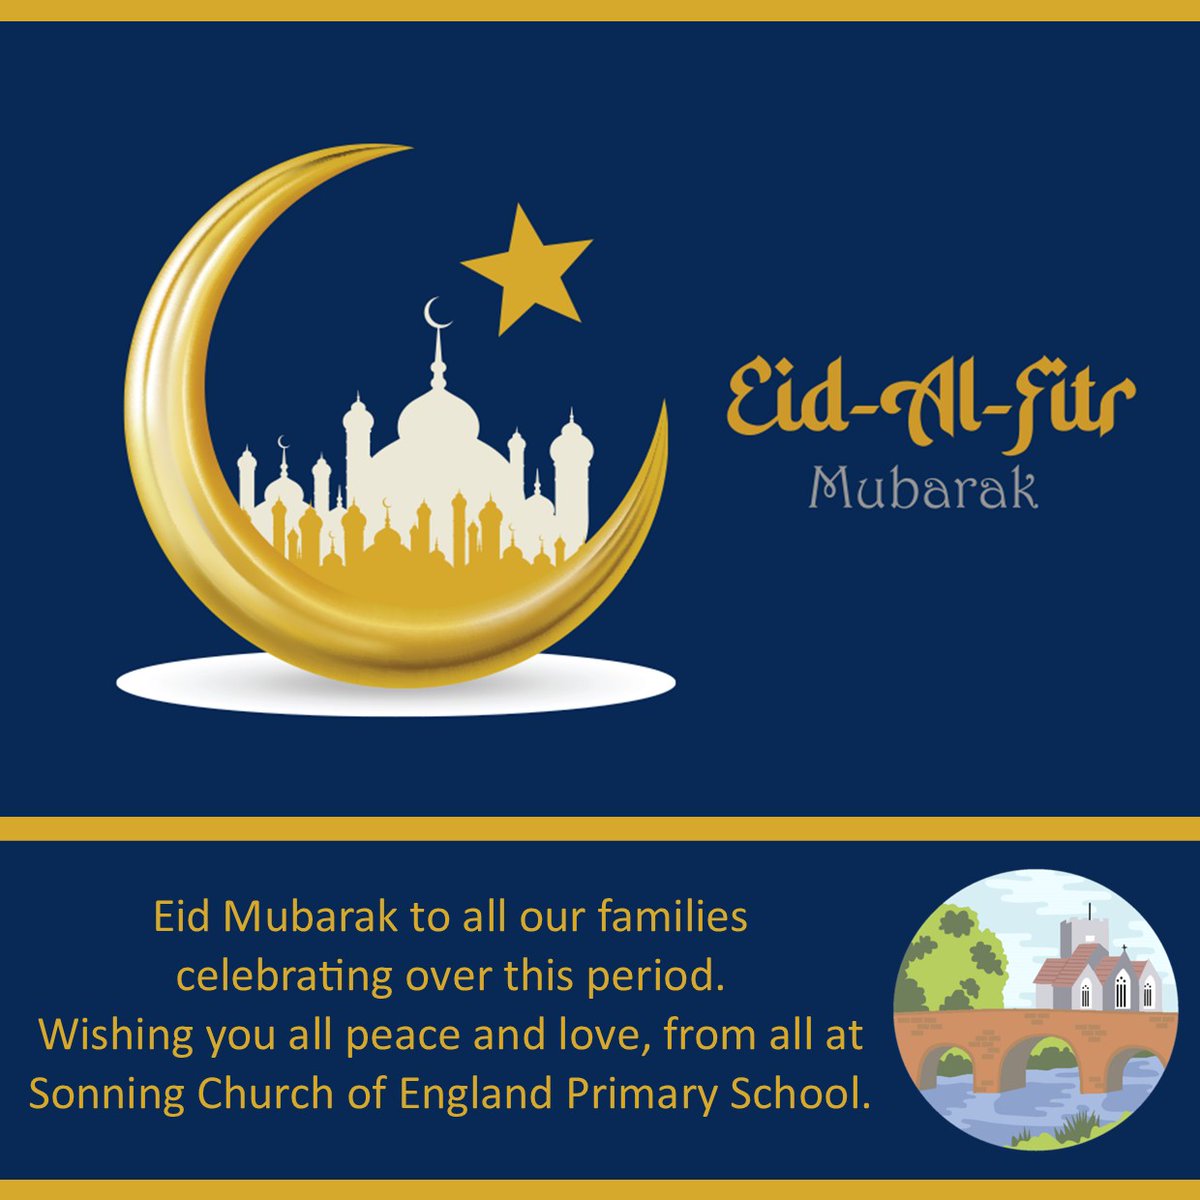 Eid Mubarak to all those celebrating the end of Ramadan ❤️ #SchoolValueLOVE #SchoolValueRESPECT #BuildingStrongFoundationsForTheYearsAhead